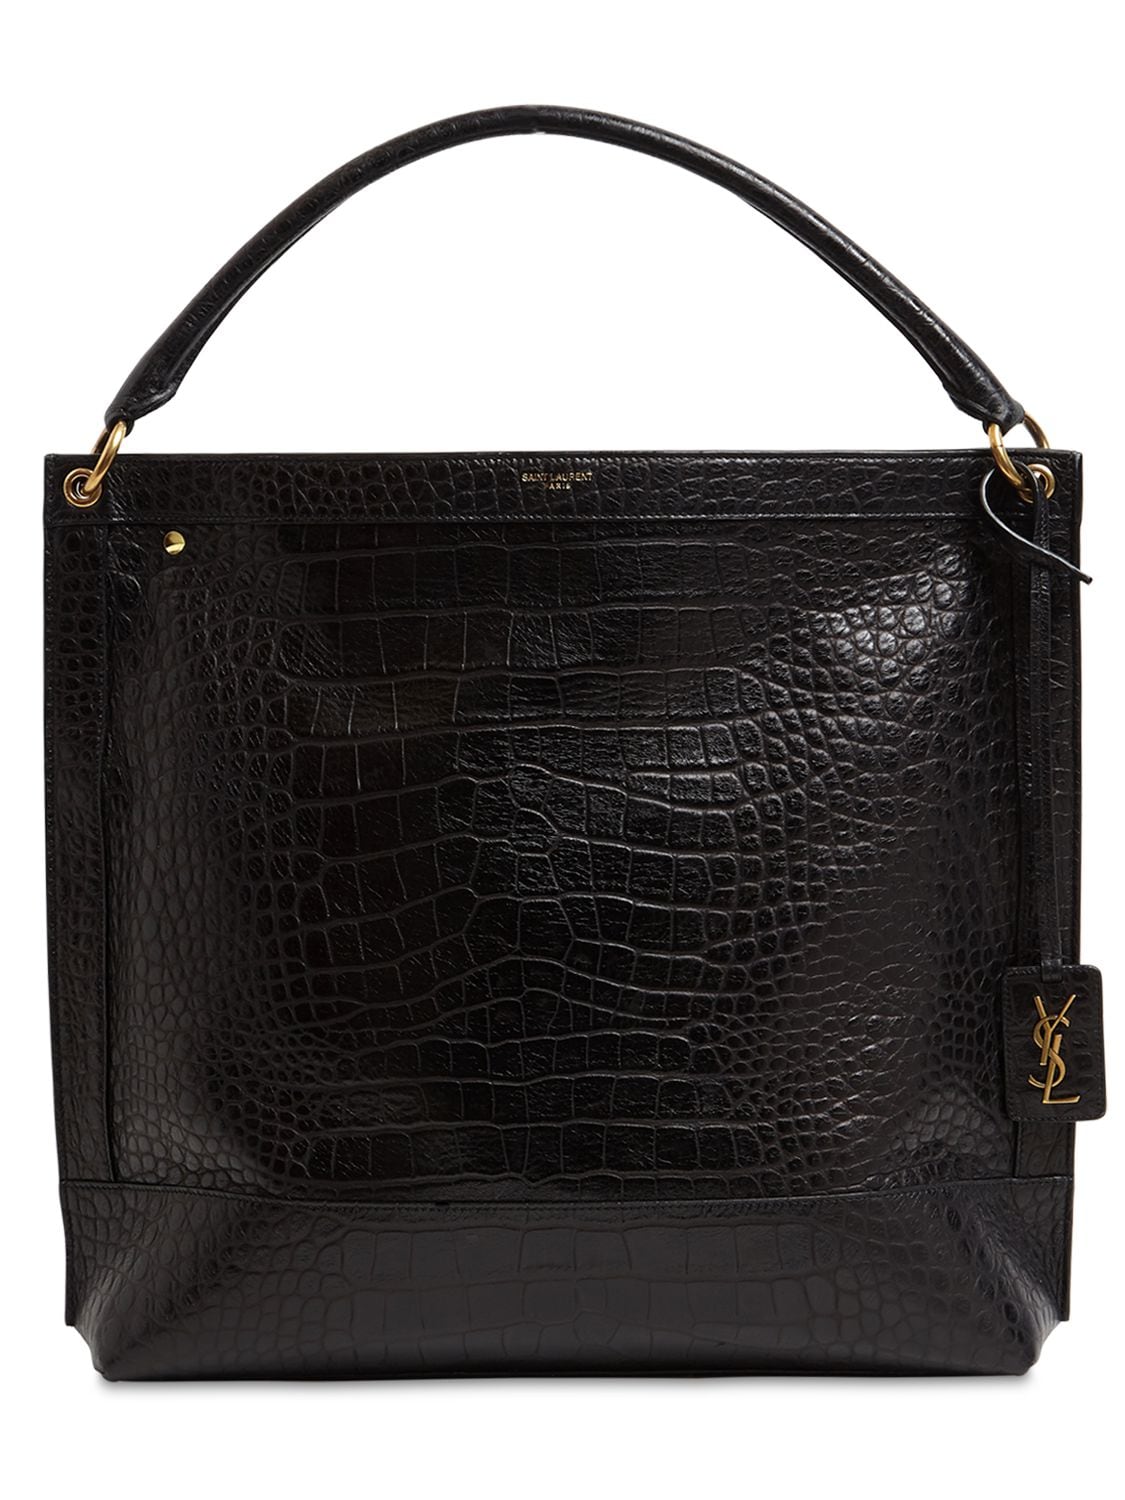 Saint Laurent Croc Embossed Leather Top Handle Bag In Black